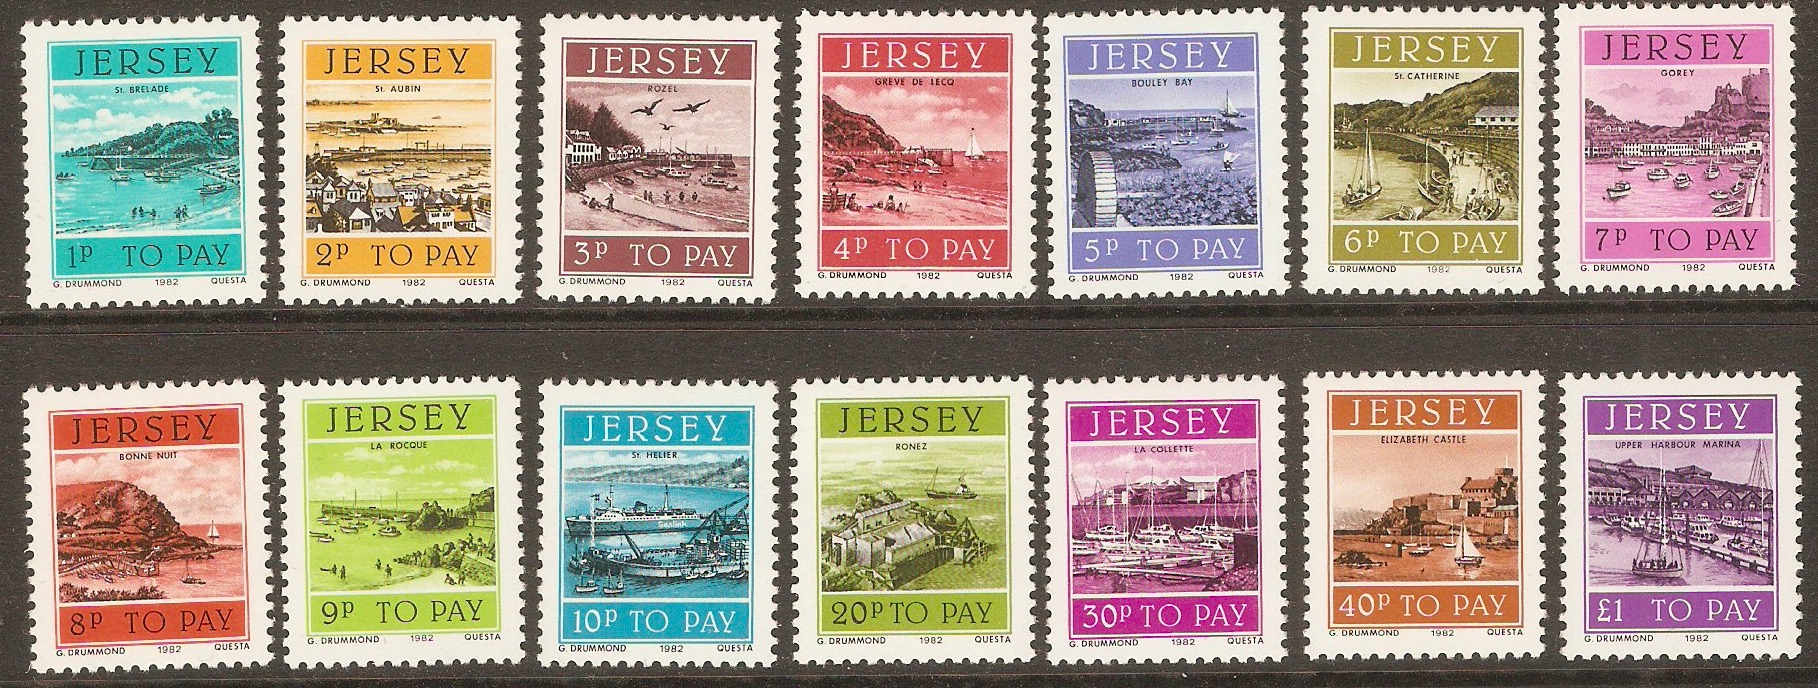 Jersey 1982 Postage Due set. SGD33-SGD46.